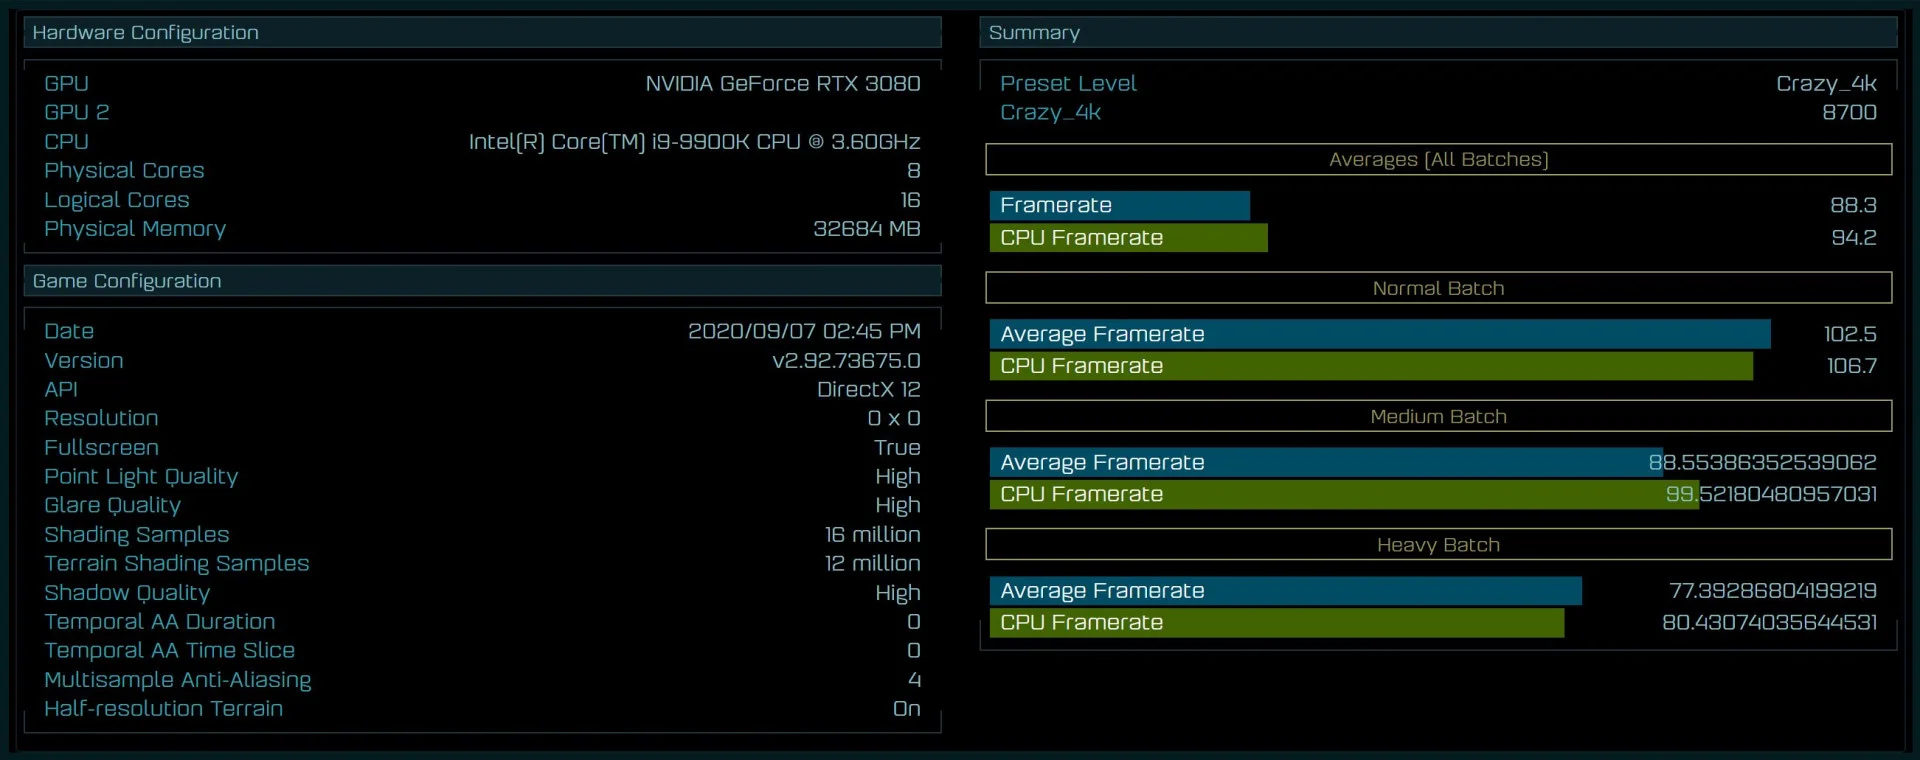 Результаты тестирования NVIDIA GeForce RTX 3080 в Ashes of the Singularity - фото 1